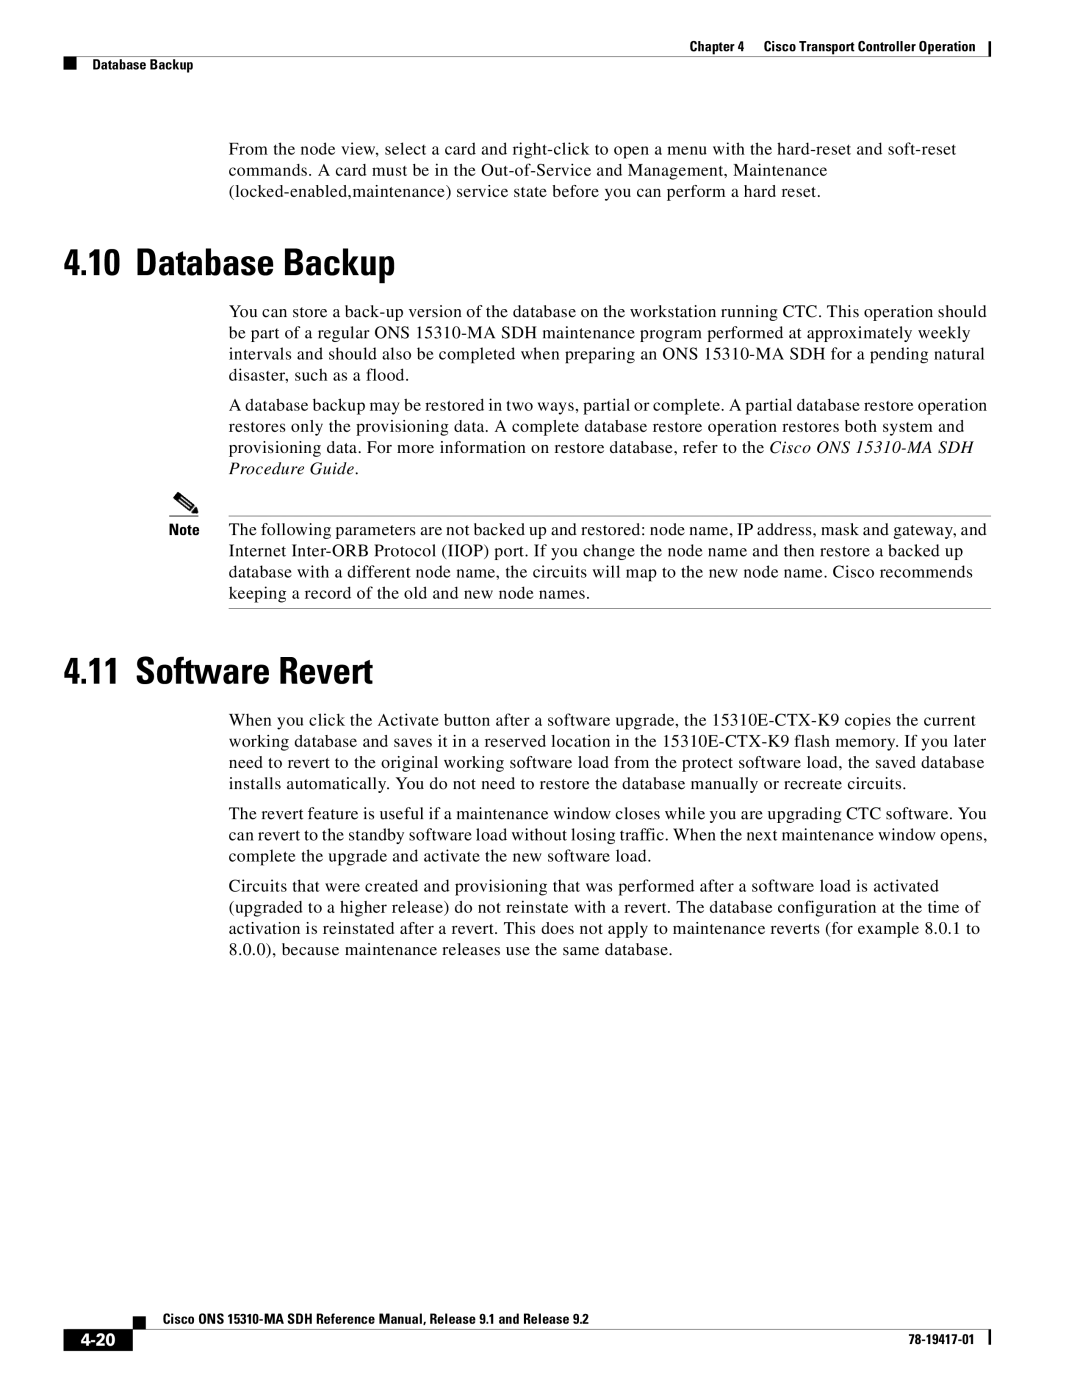 Cisco Systems 15310-MA manual Database Backup, Software Revert 